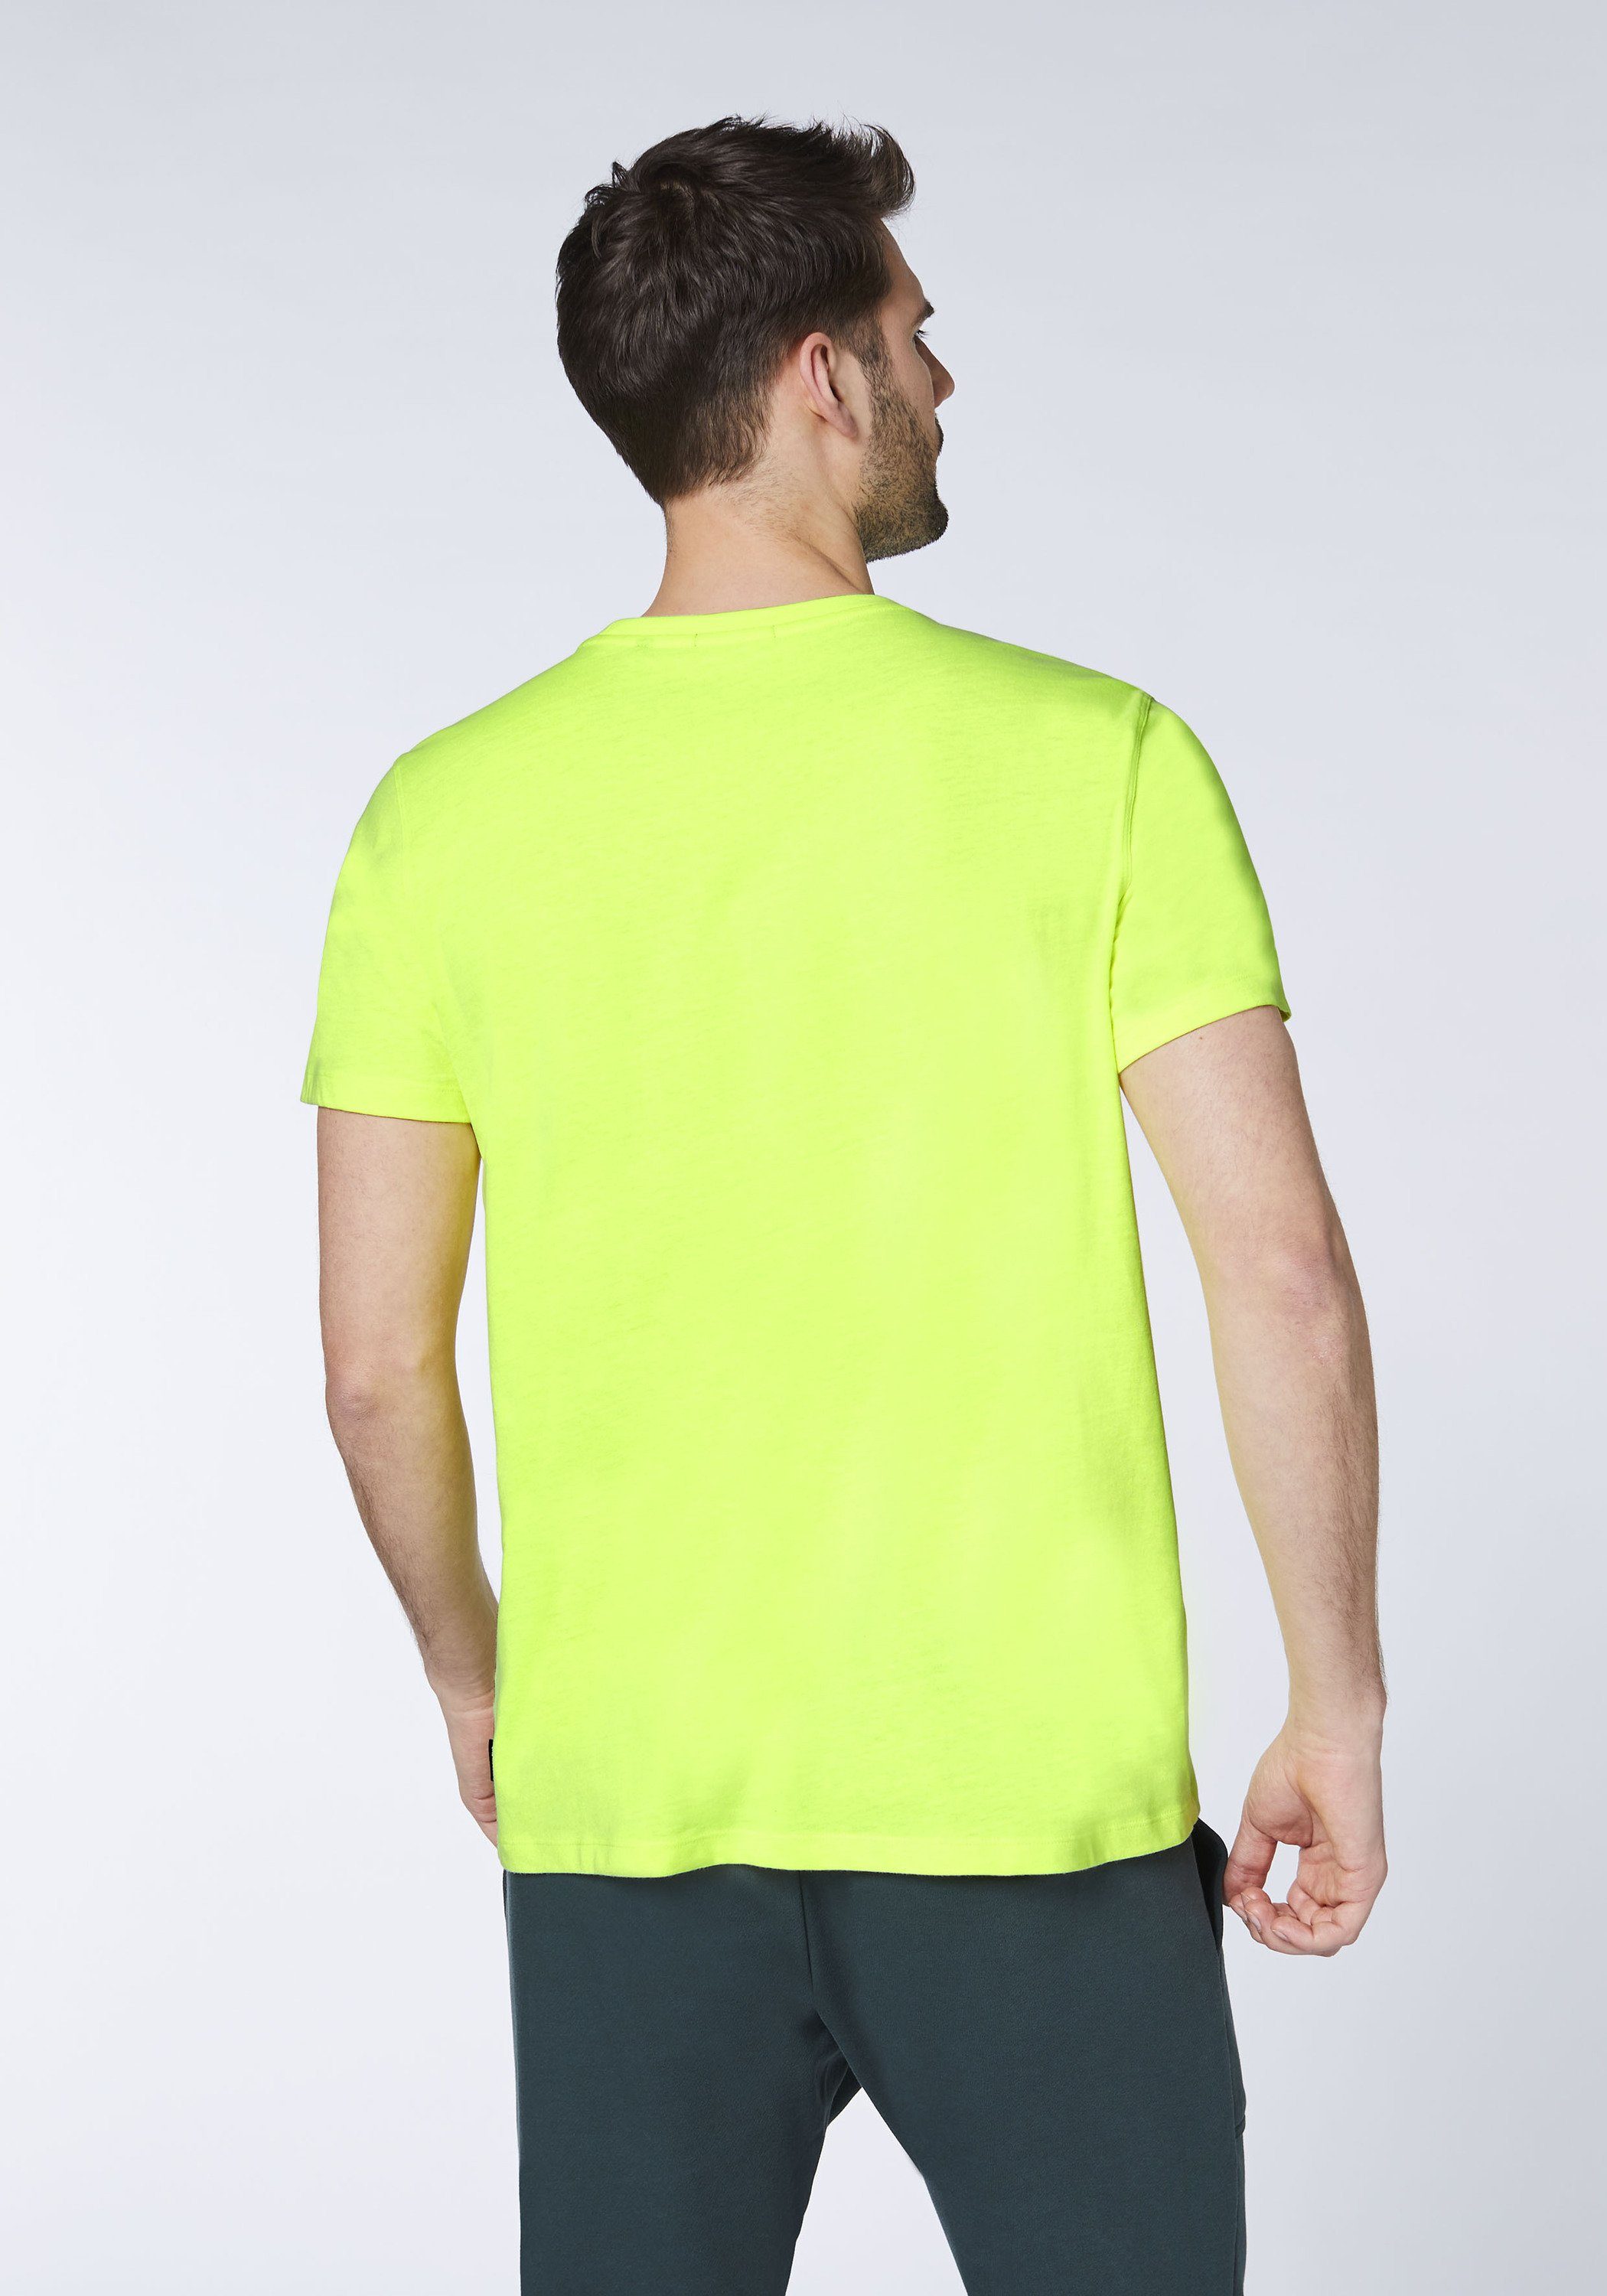 Chiemsee Print-Shirt T-Shirt mit Jumper-Motiv 1 Safety Yellow